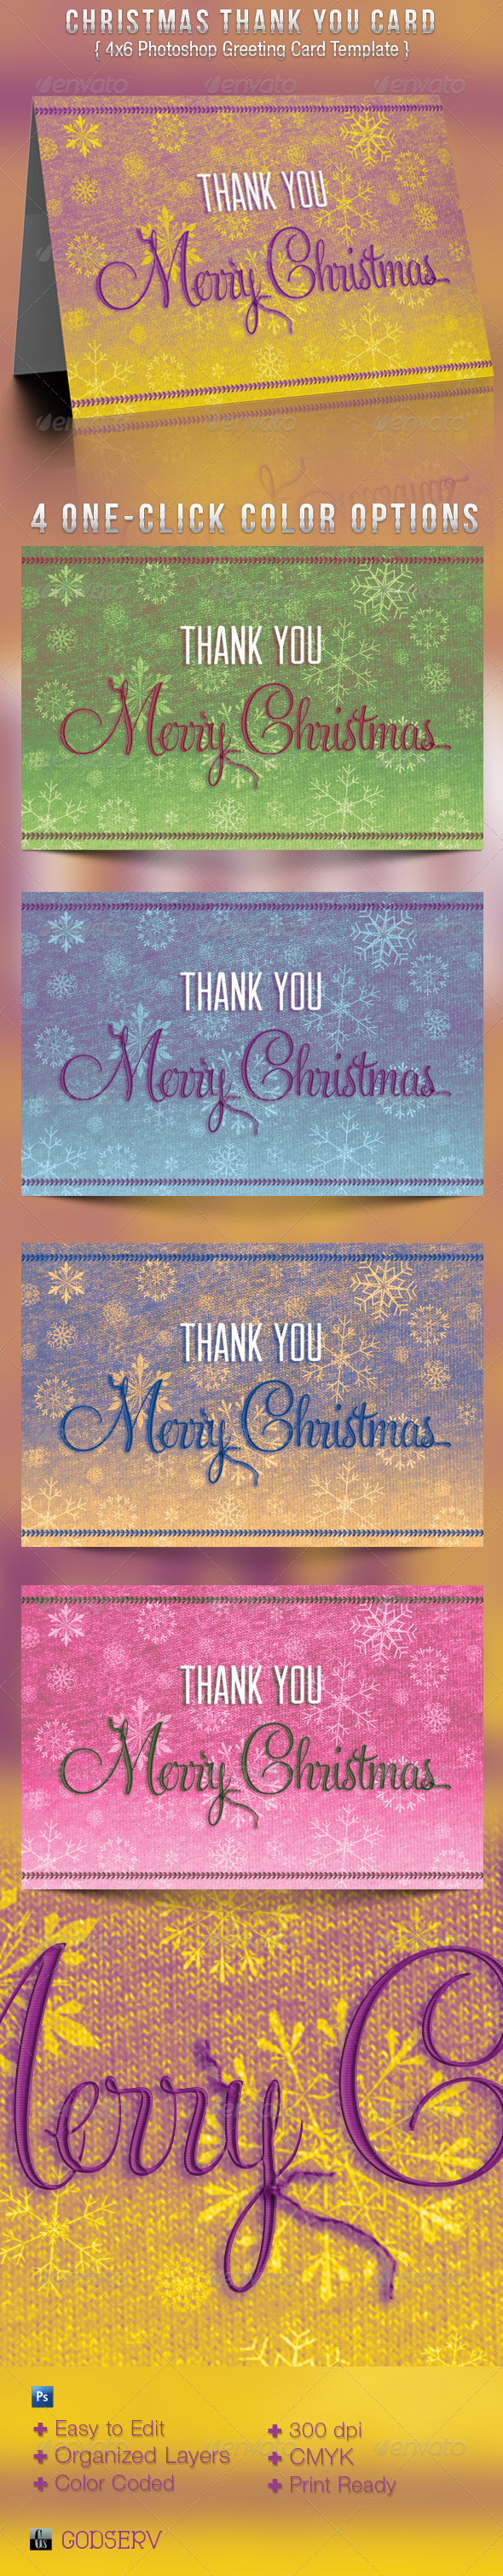 Christmas Thank You Greeting Card Template